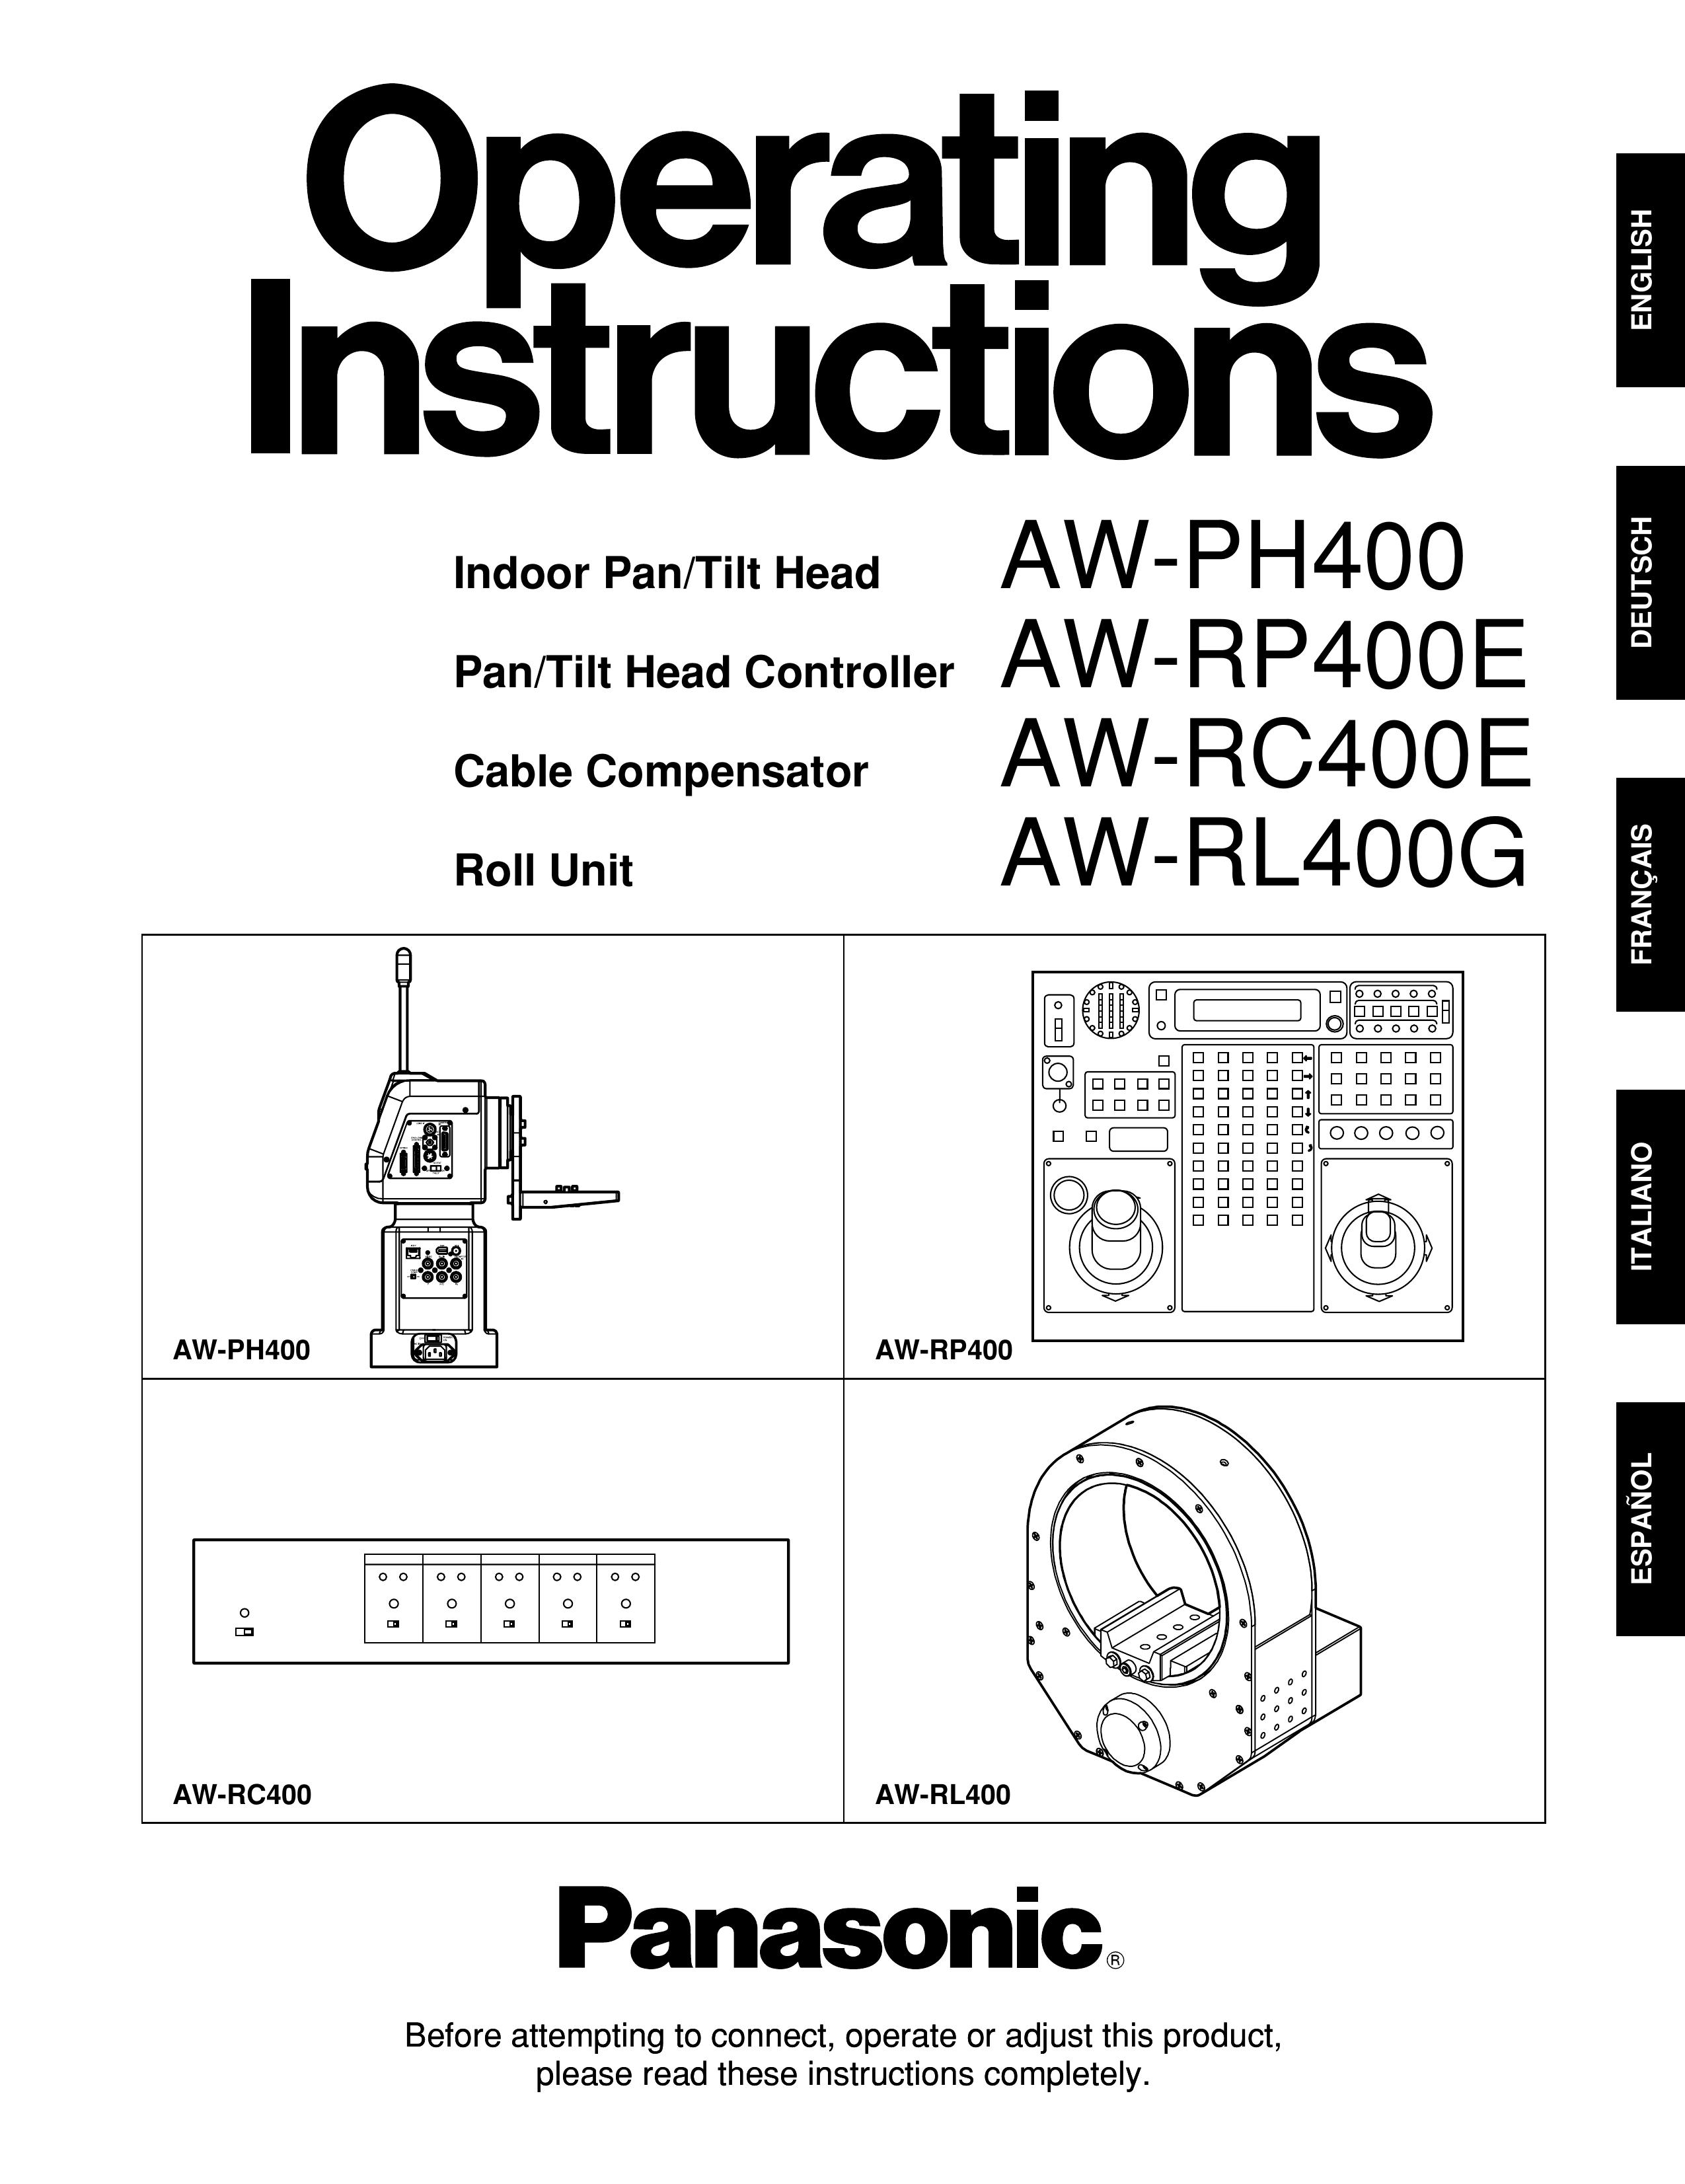 Panasonic AW-RL400G Digital Camera User Manual